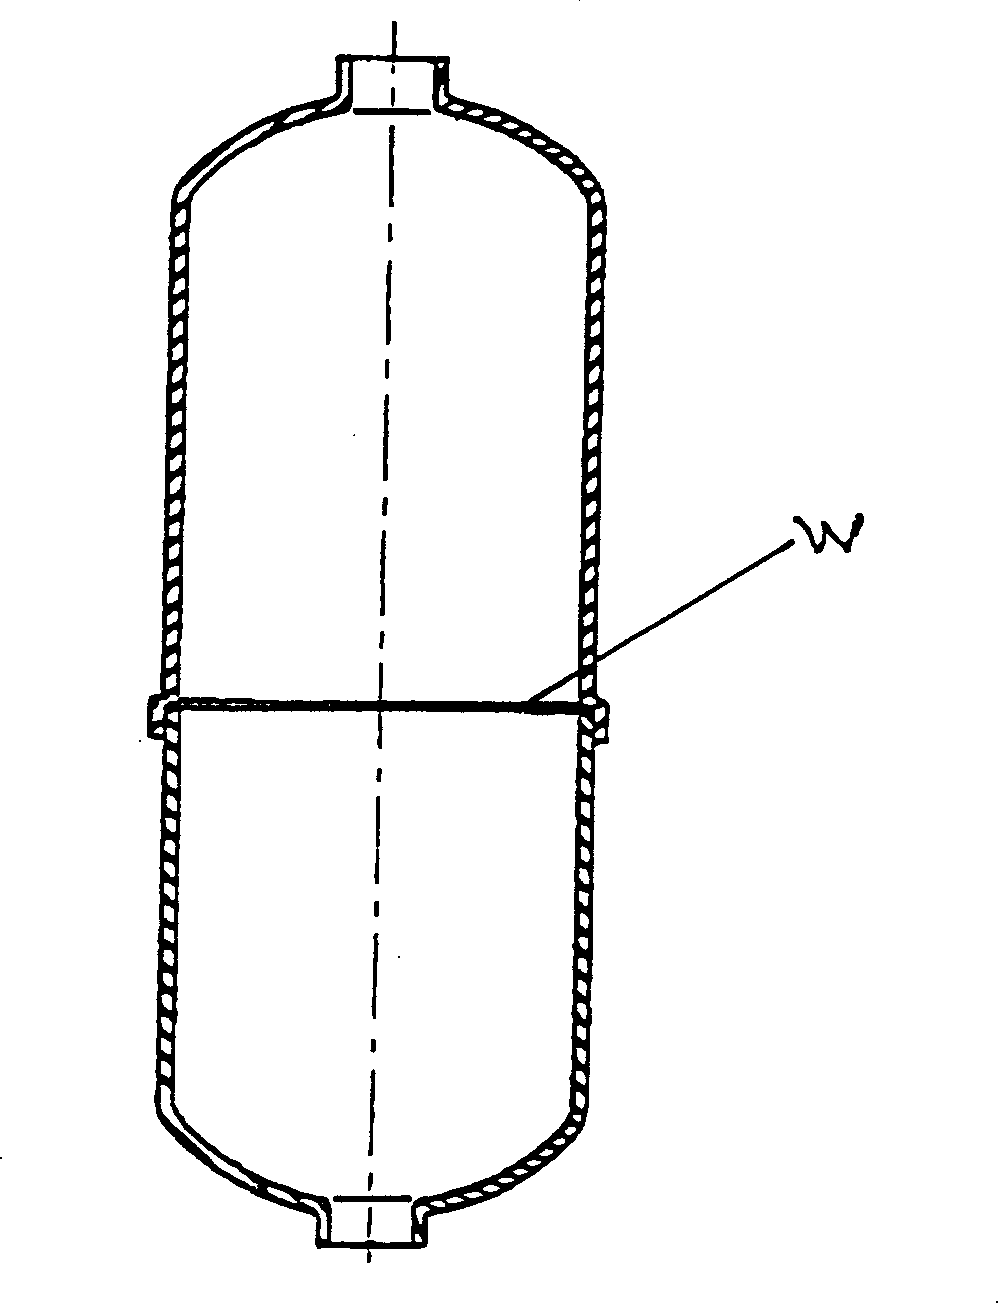 Method for forming steel liquid storage cylinder